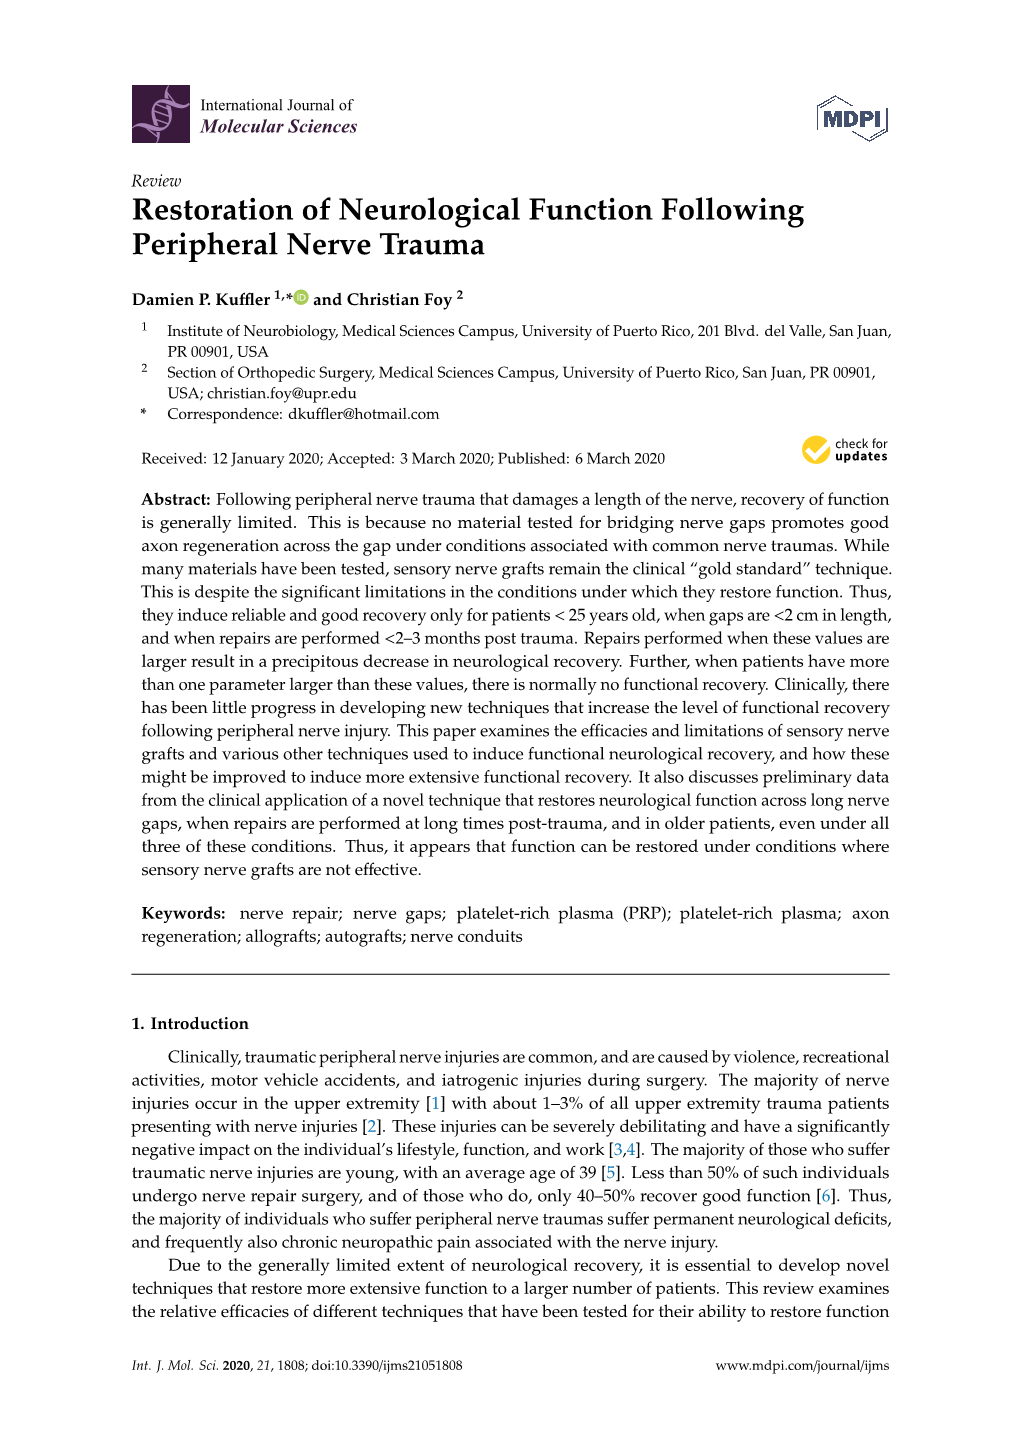 Restoration of Neurological Function Following Peripheral Nerve Trauma